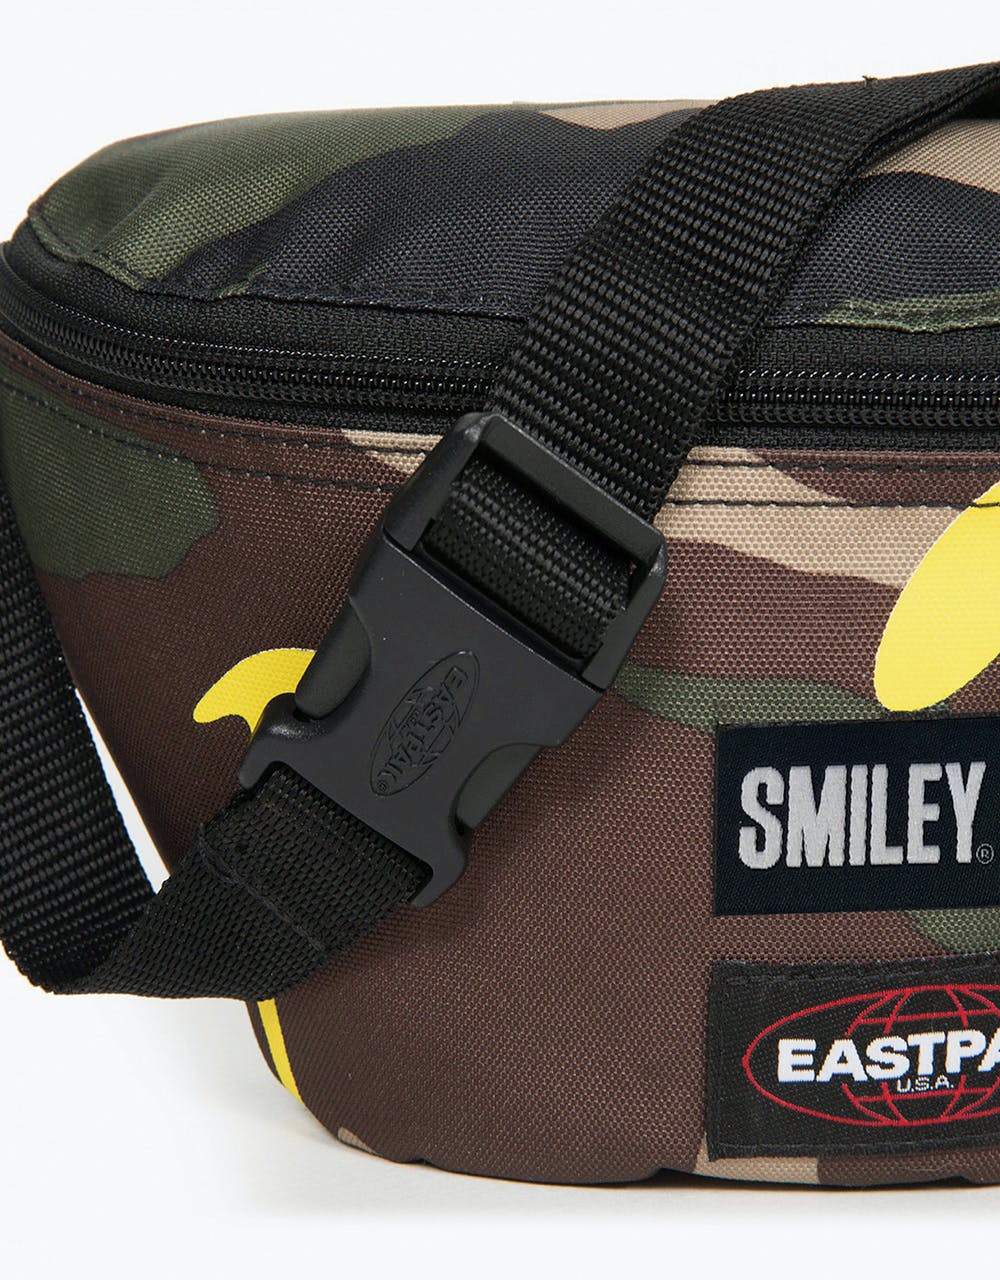 Eastpak x Smiley Springer Cross Body Bag - Smile Camo